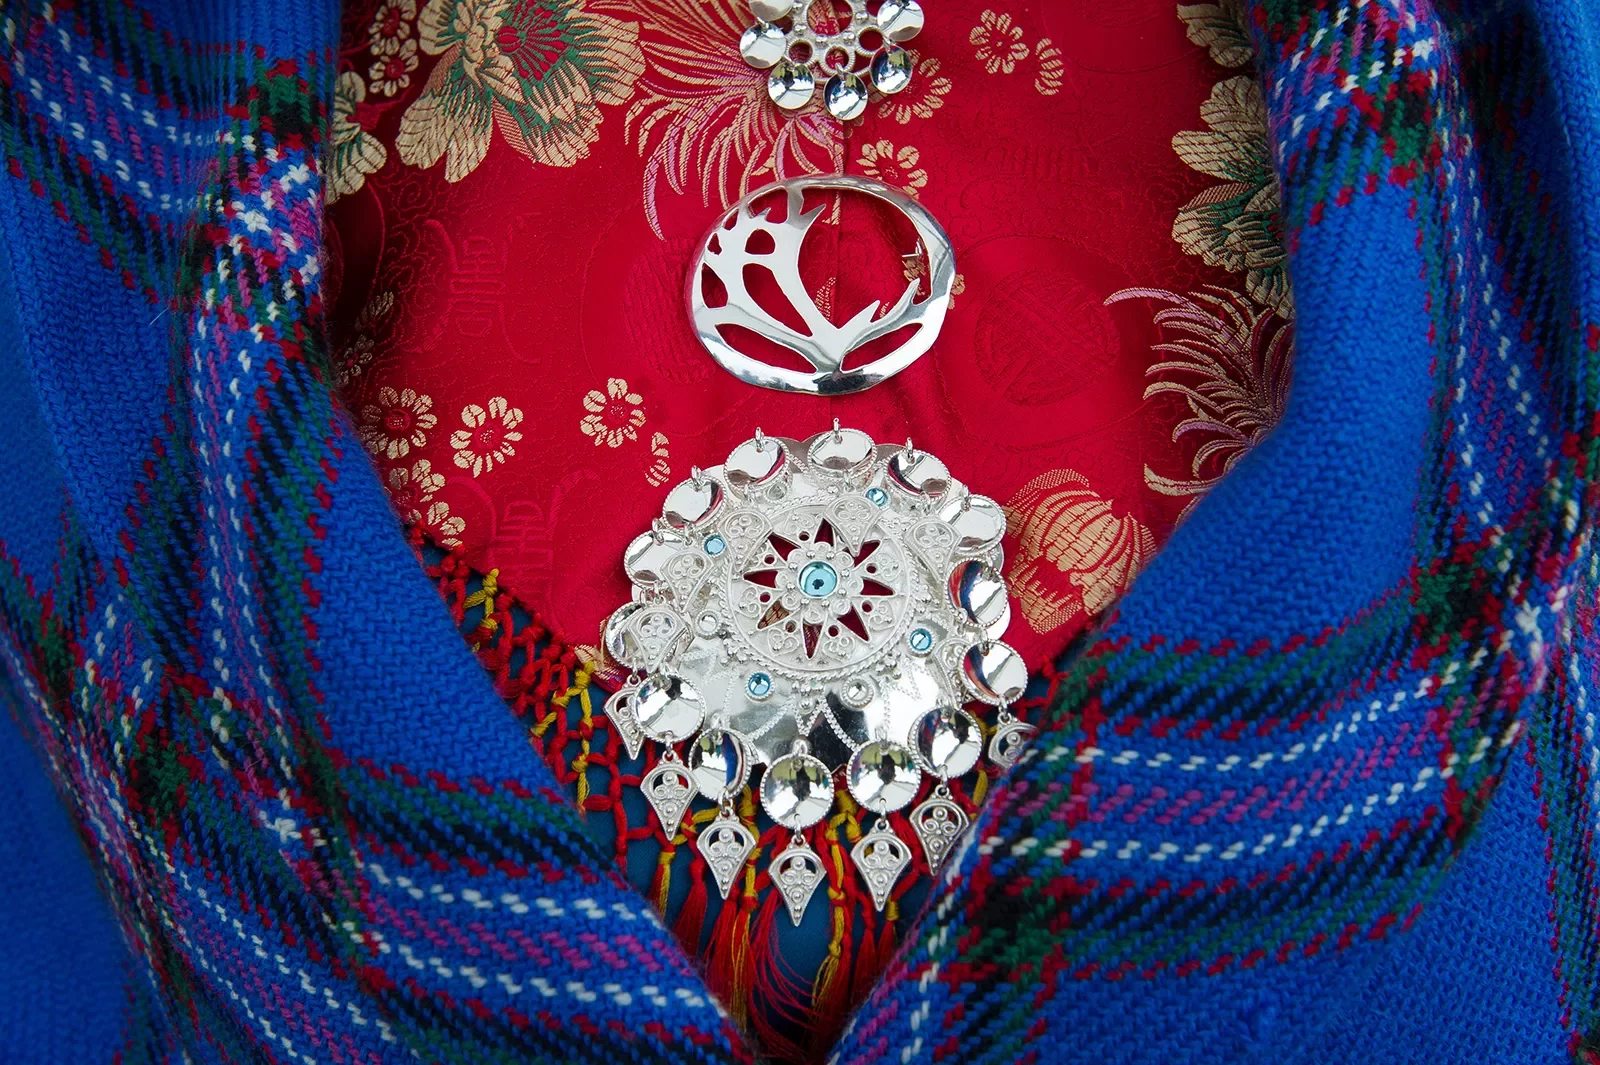 Front shot of colorful dress, medallions, blanket.